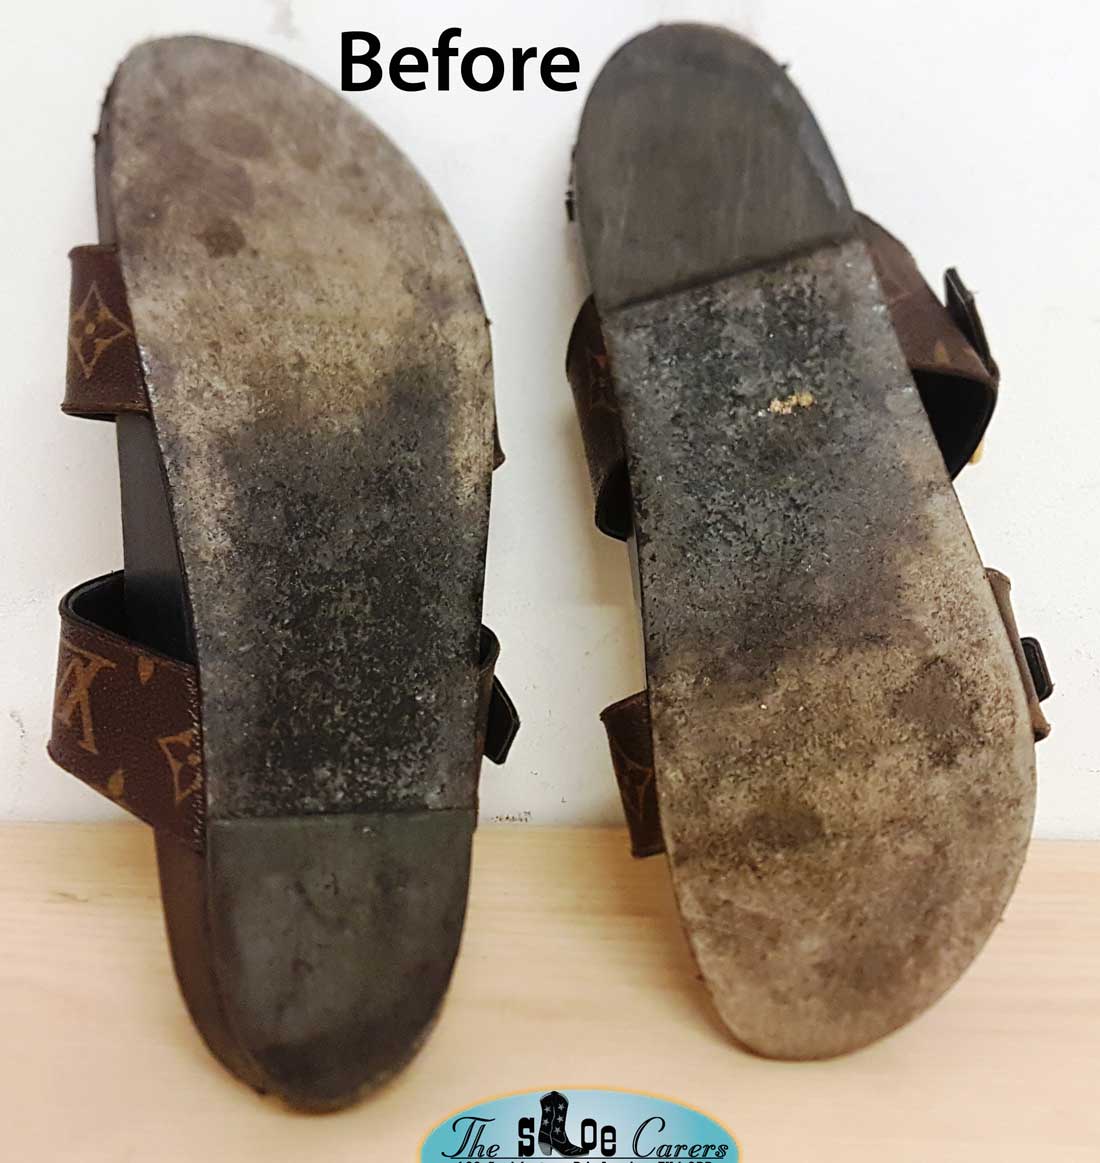 Louis Vuitton sandals restored – The Shoe Carers